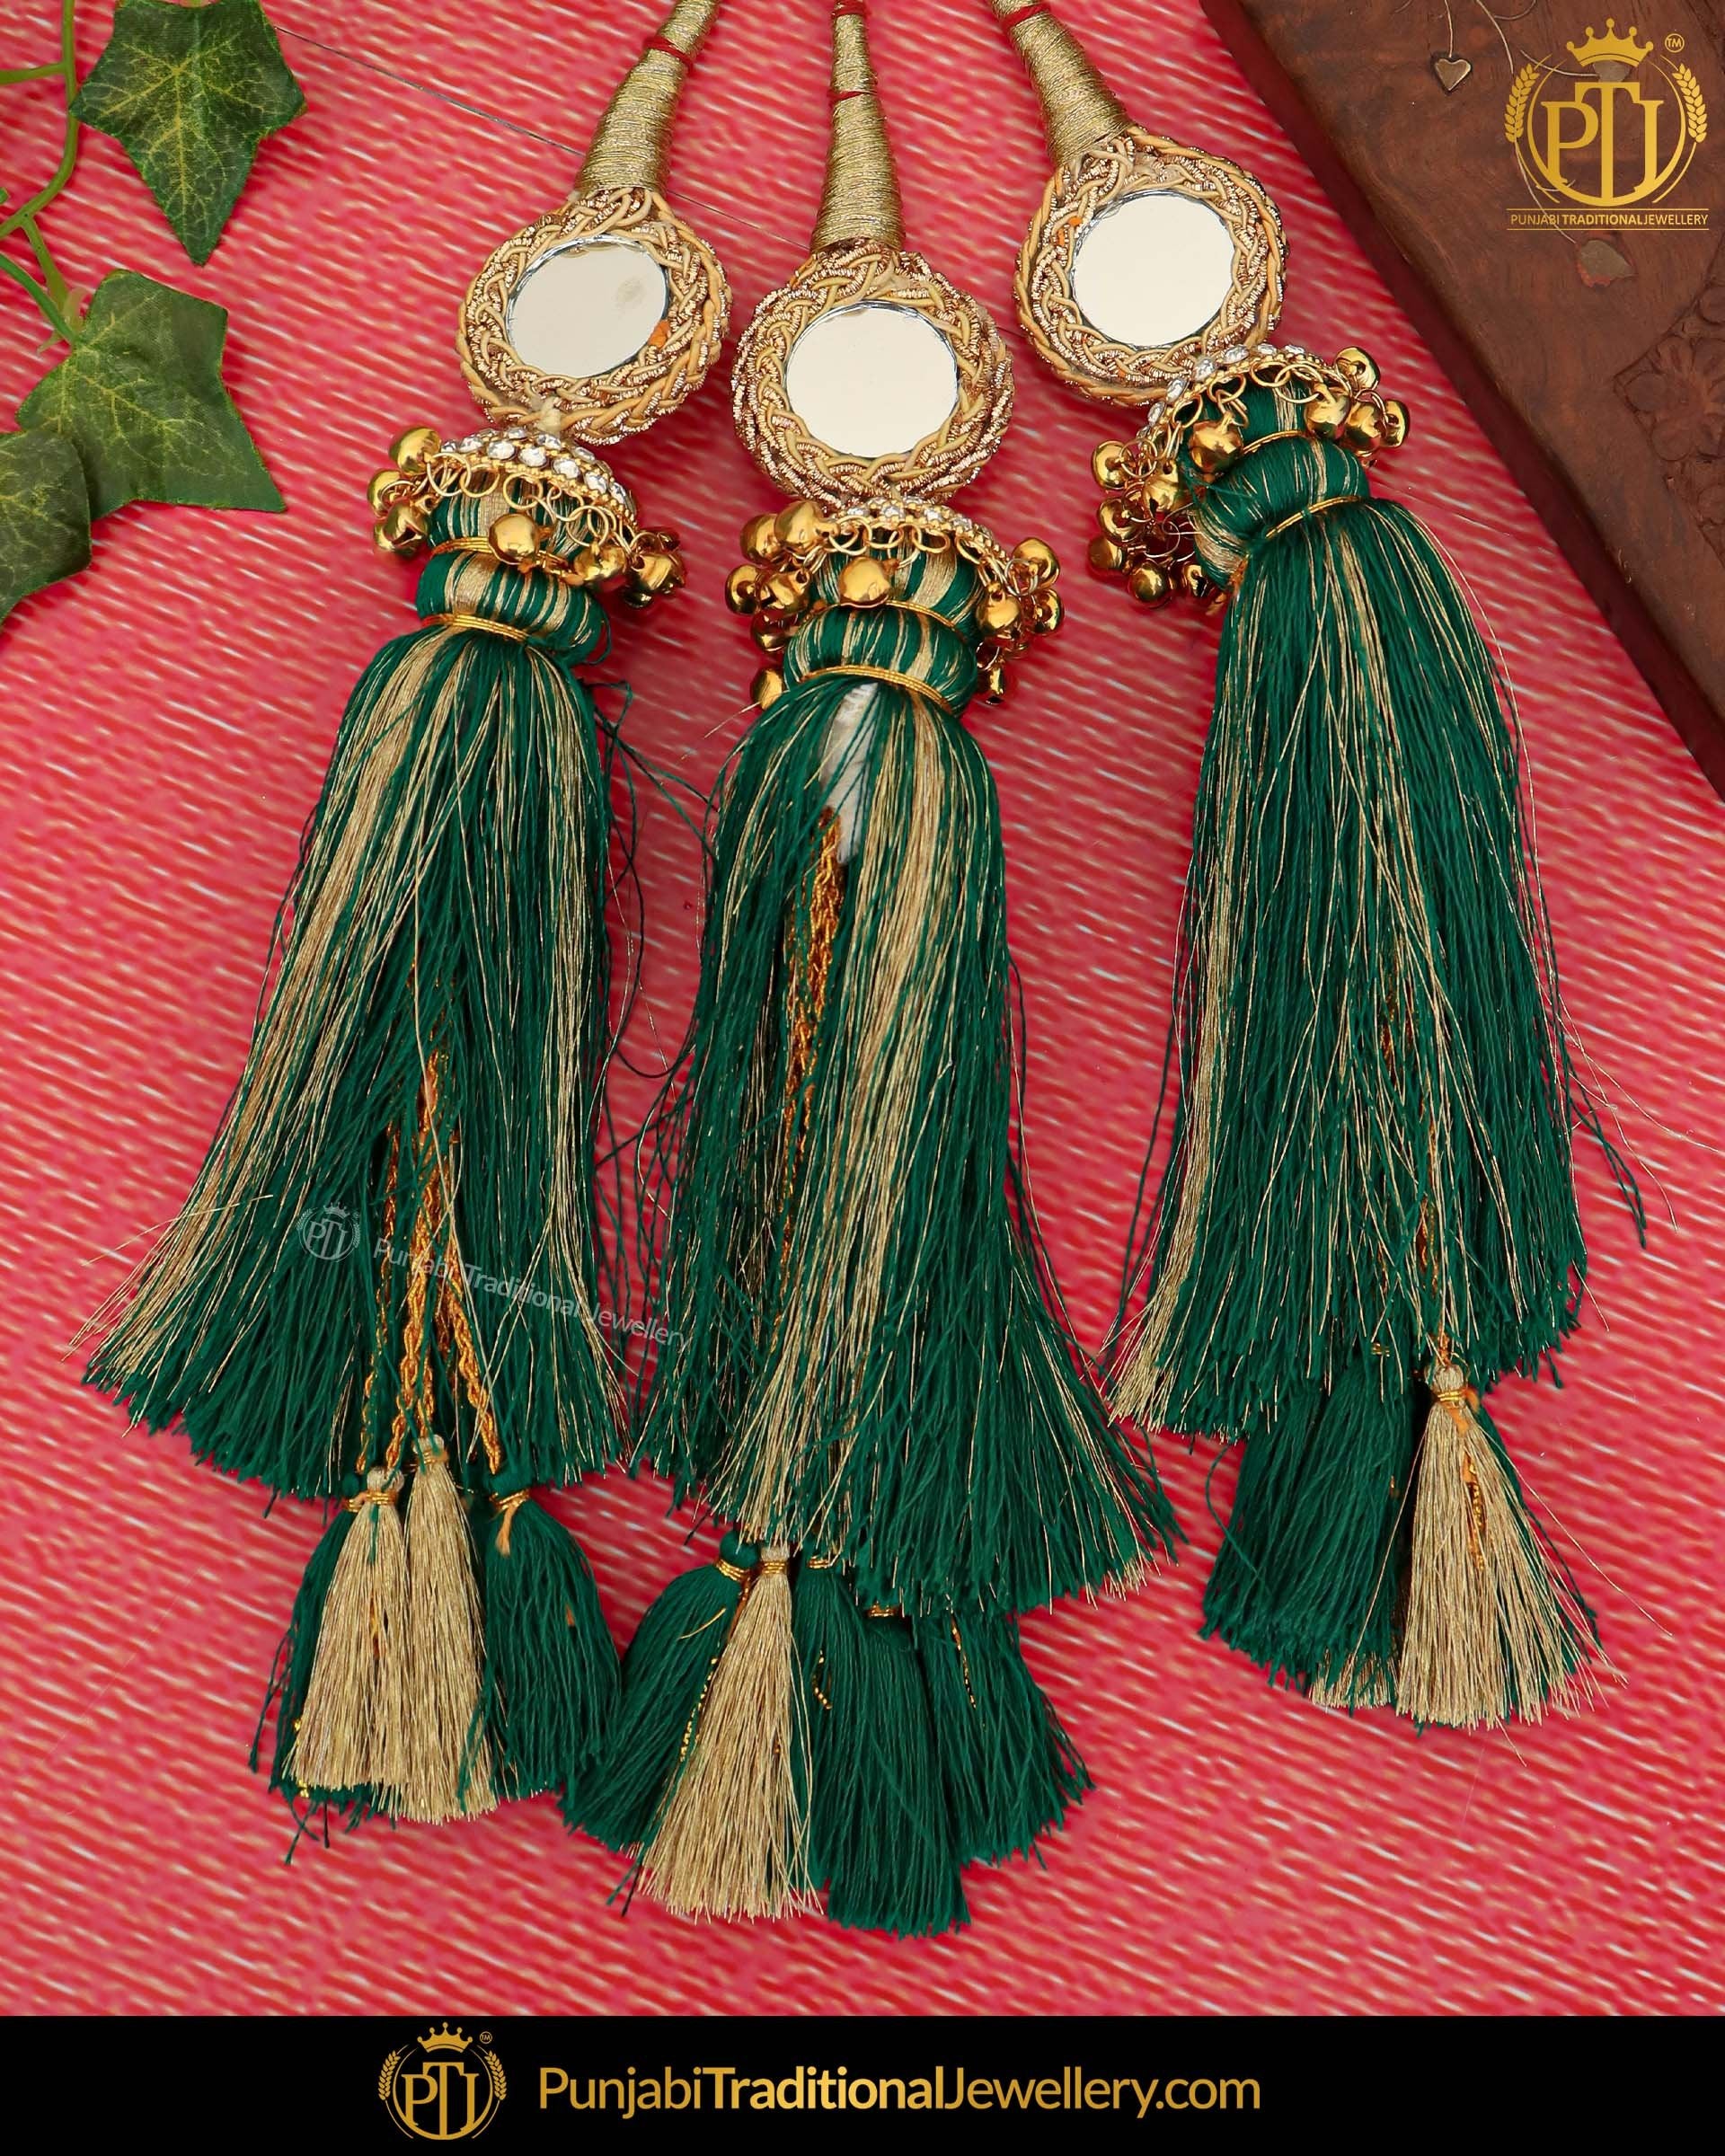 Green Color Prandi Lottan With Mirror | Pipal Diya Peengan by Punjabi Traditional Jewellery Exclusive